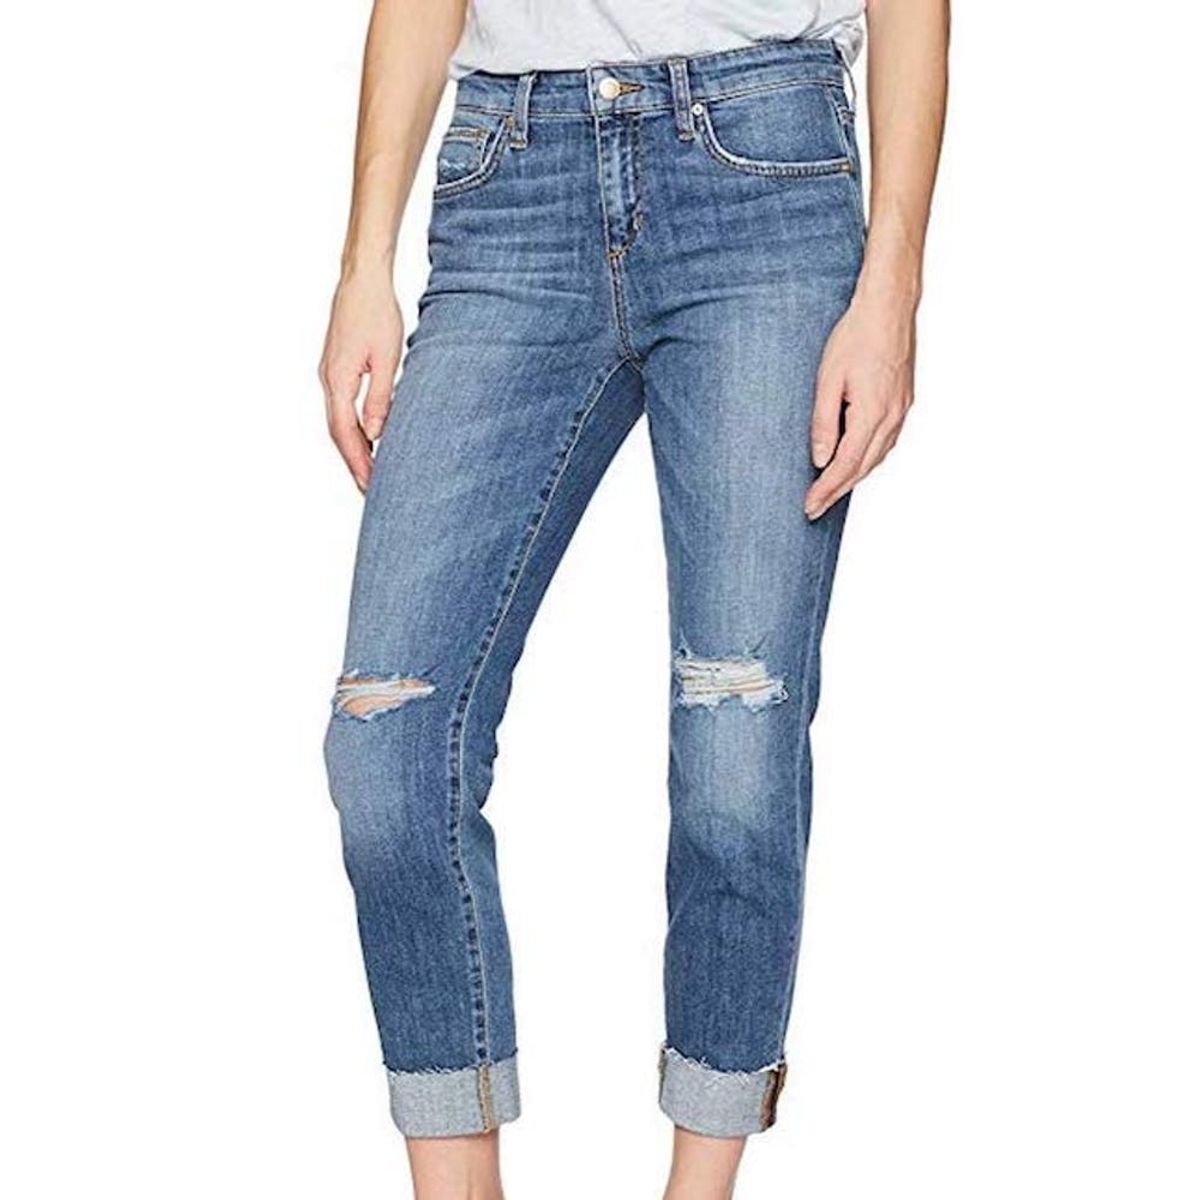 12 Best Jeans on Amazon Under $100